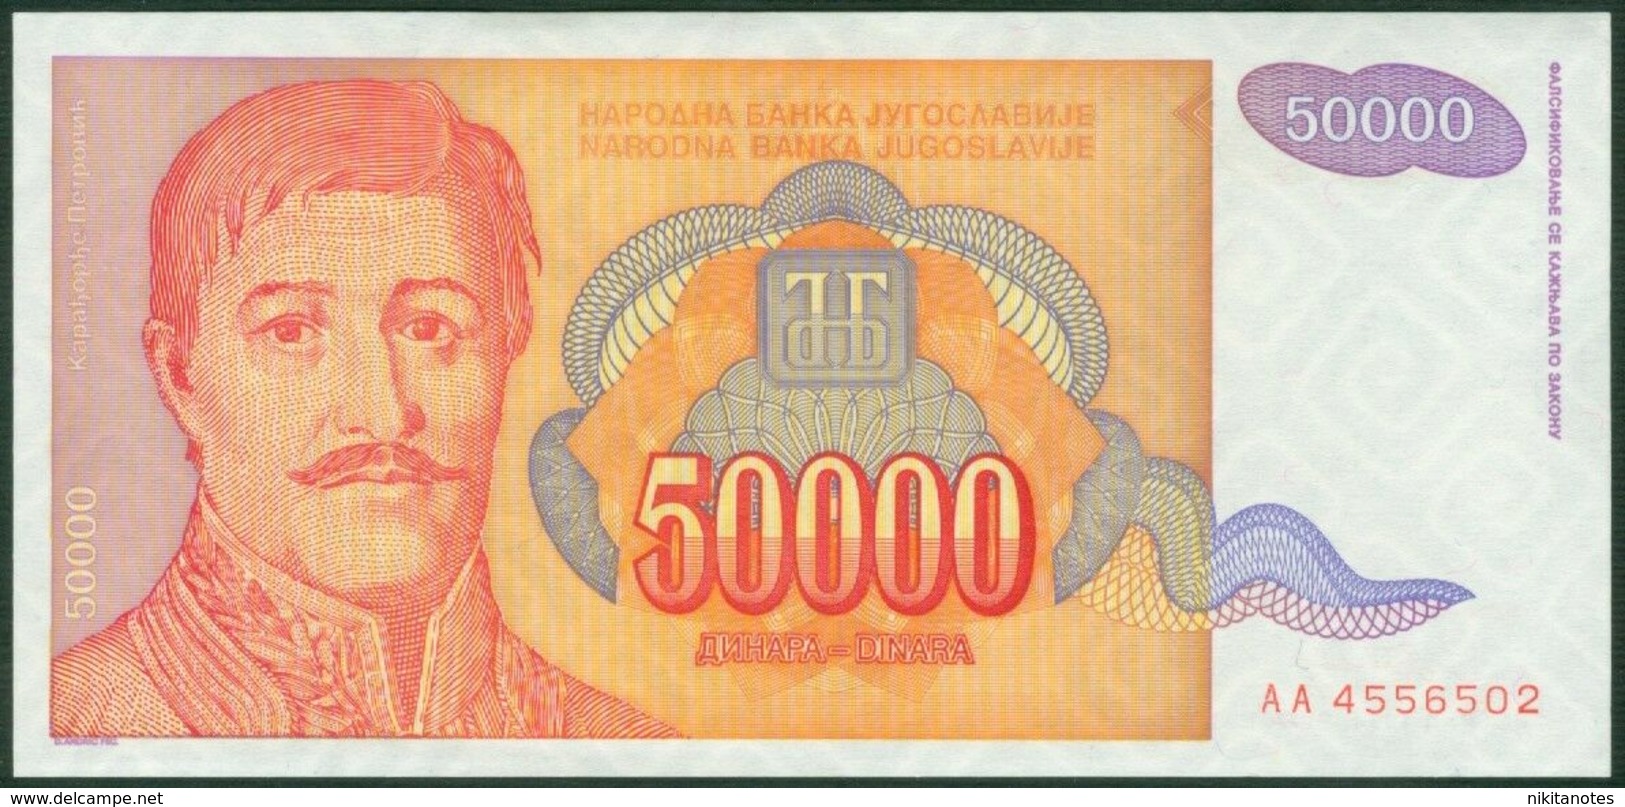 YUGOSLAVIA 50000 DINARA 1994 P 142 Aunc - Yougoslavie